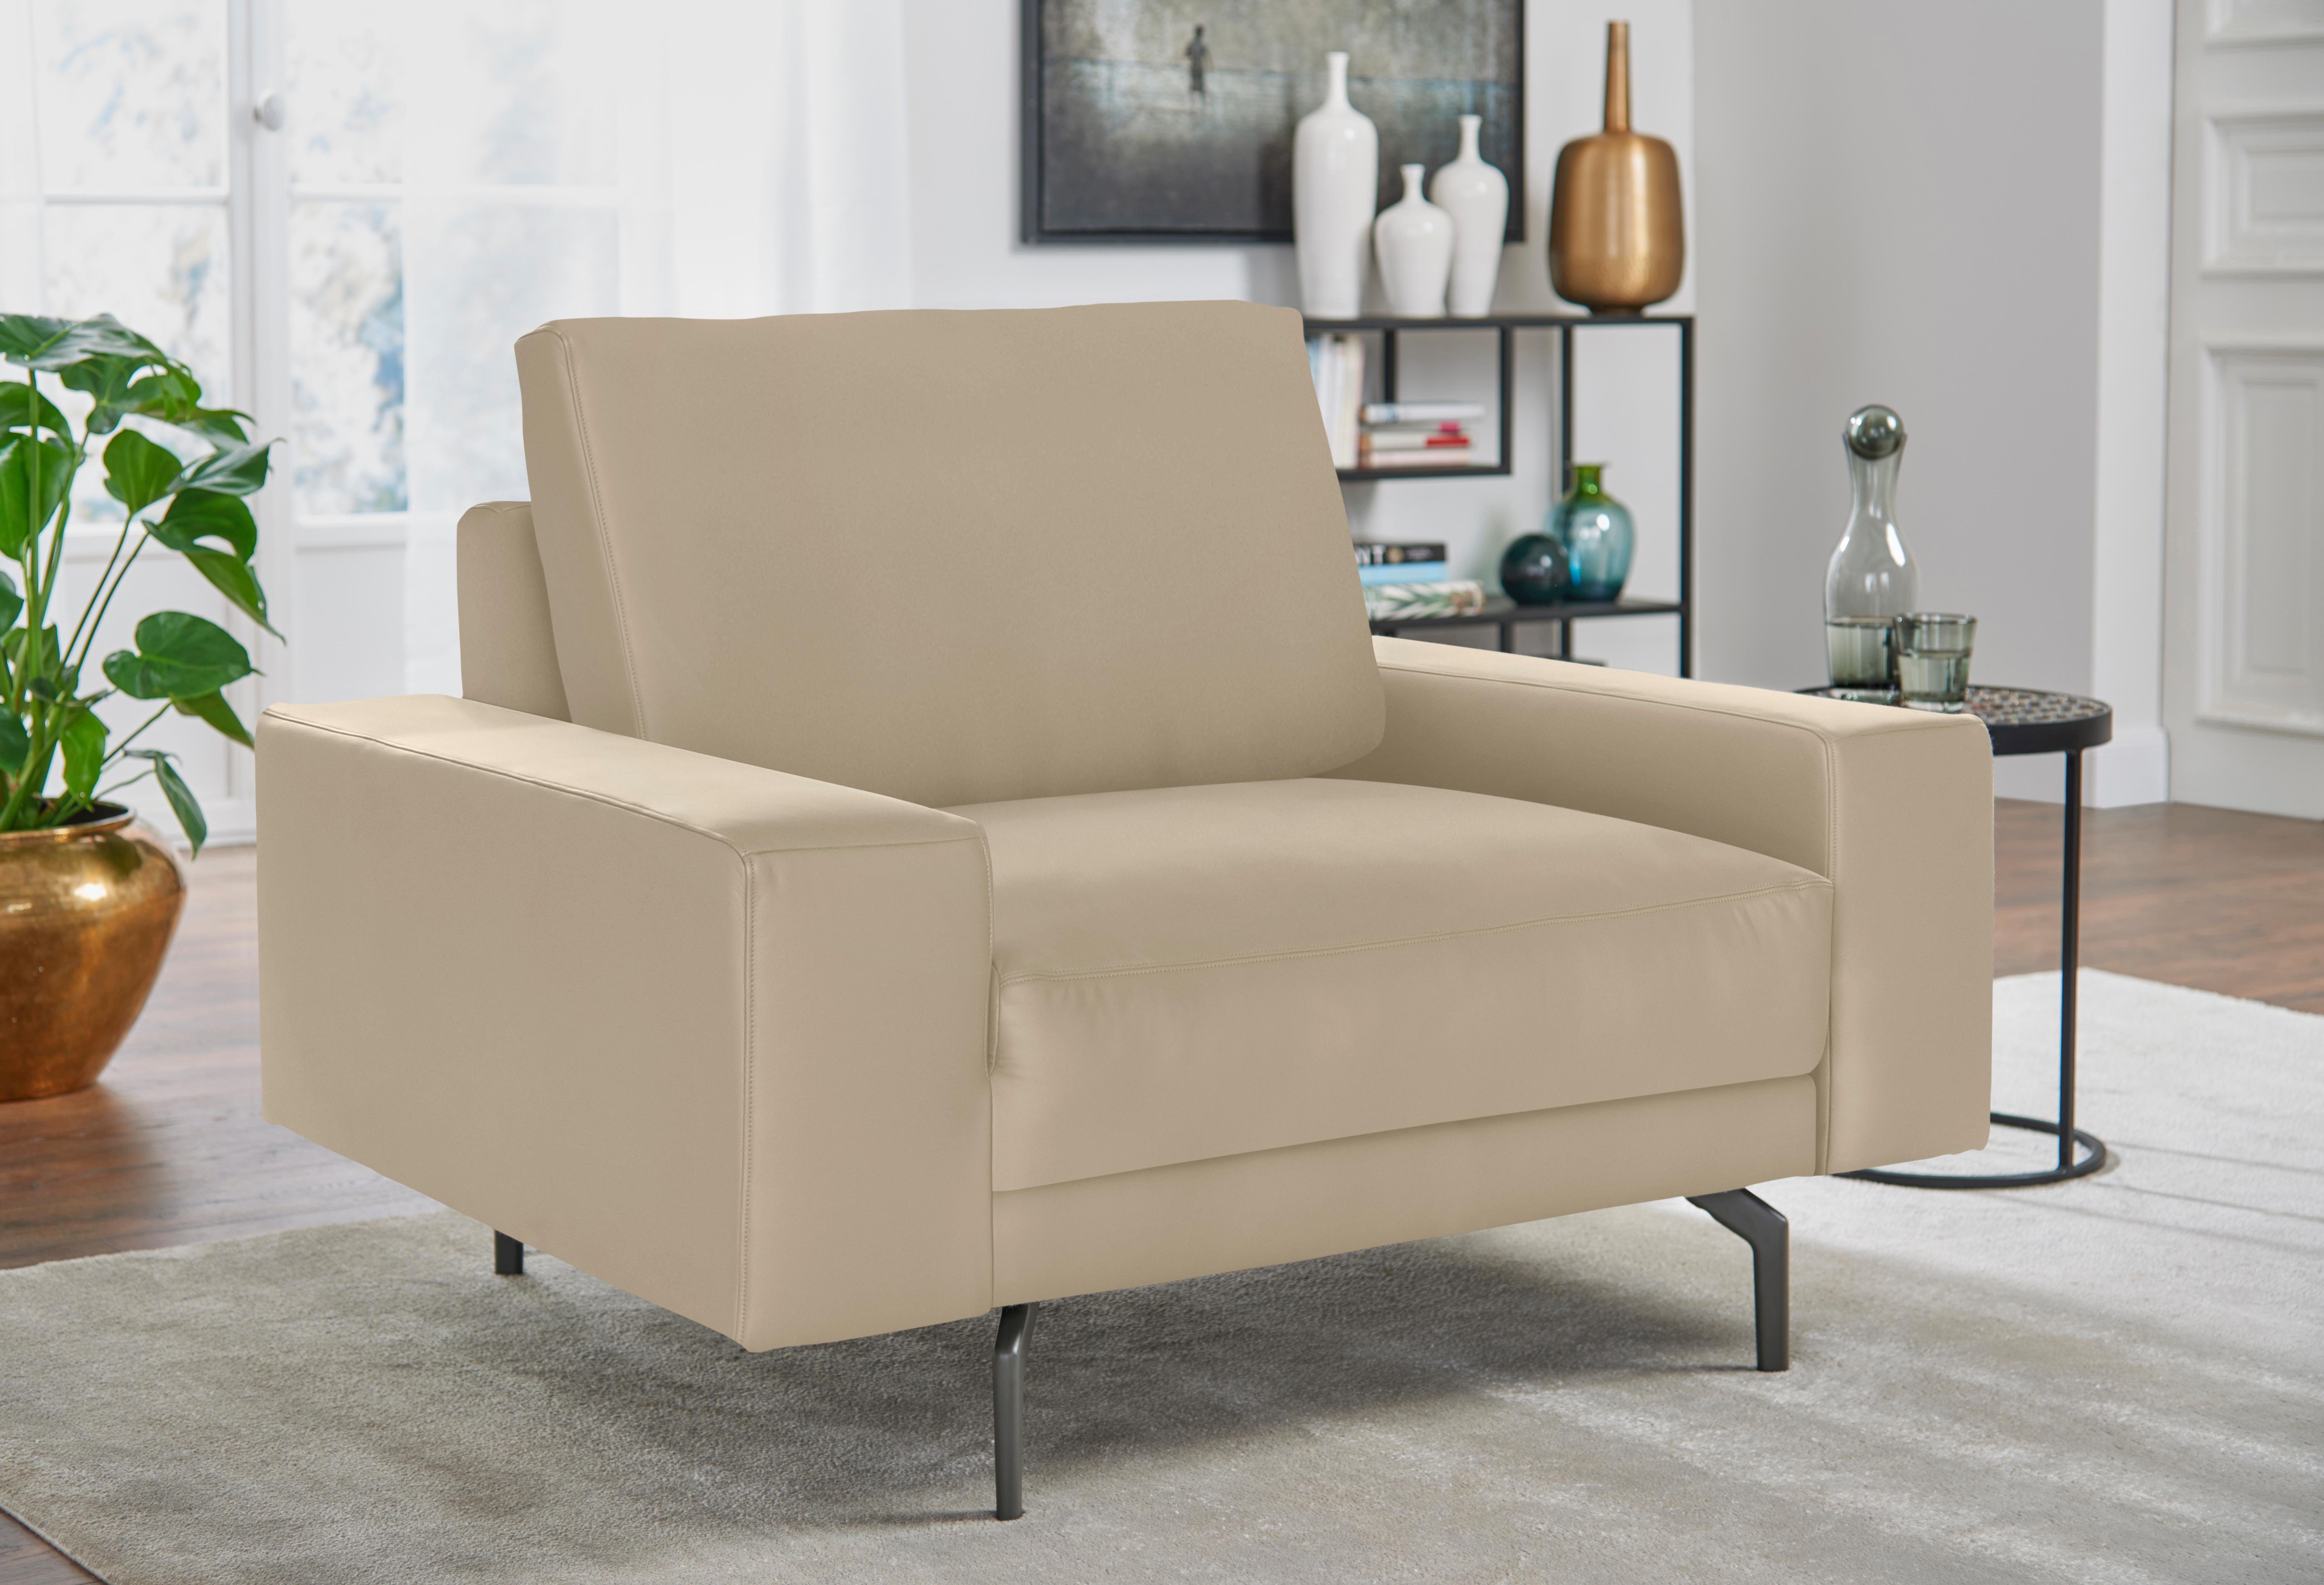 sofa hülsta umbragrau, Sessel hs.450, Armlehne Alugussfüße niedrig, cm Breite in breit 120